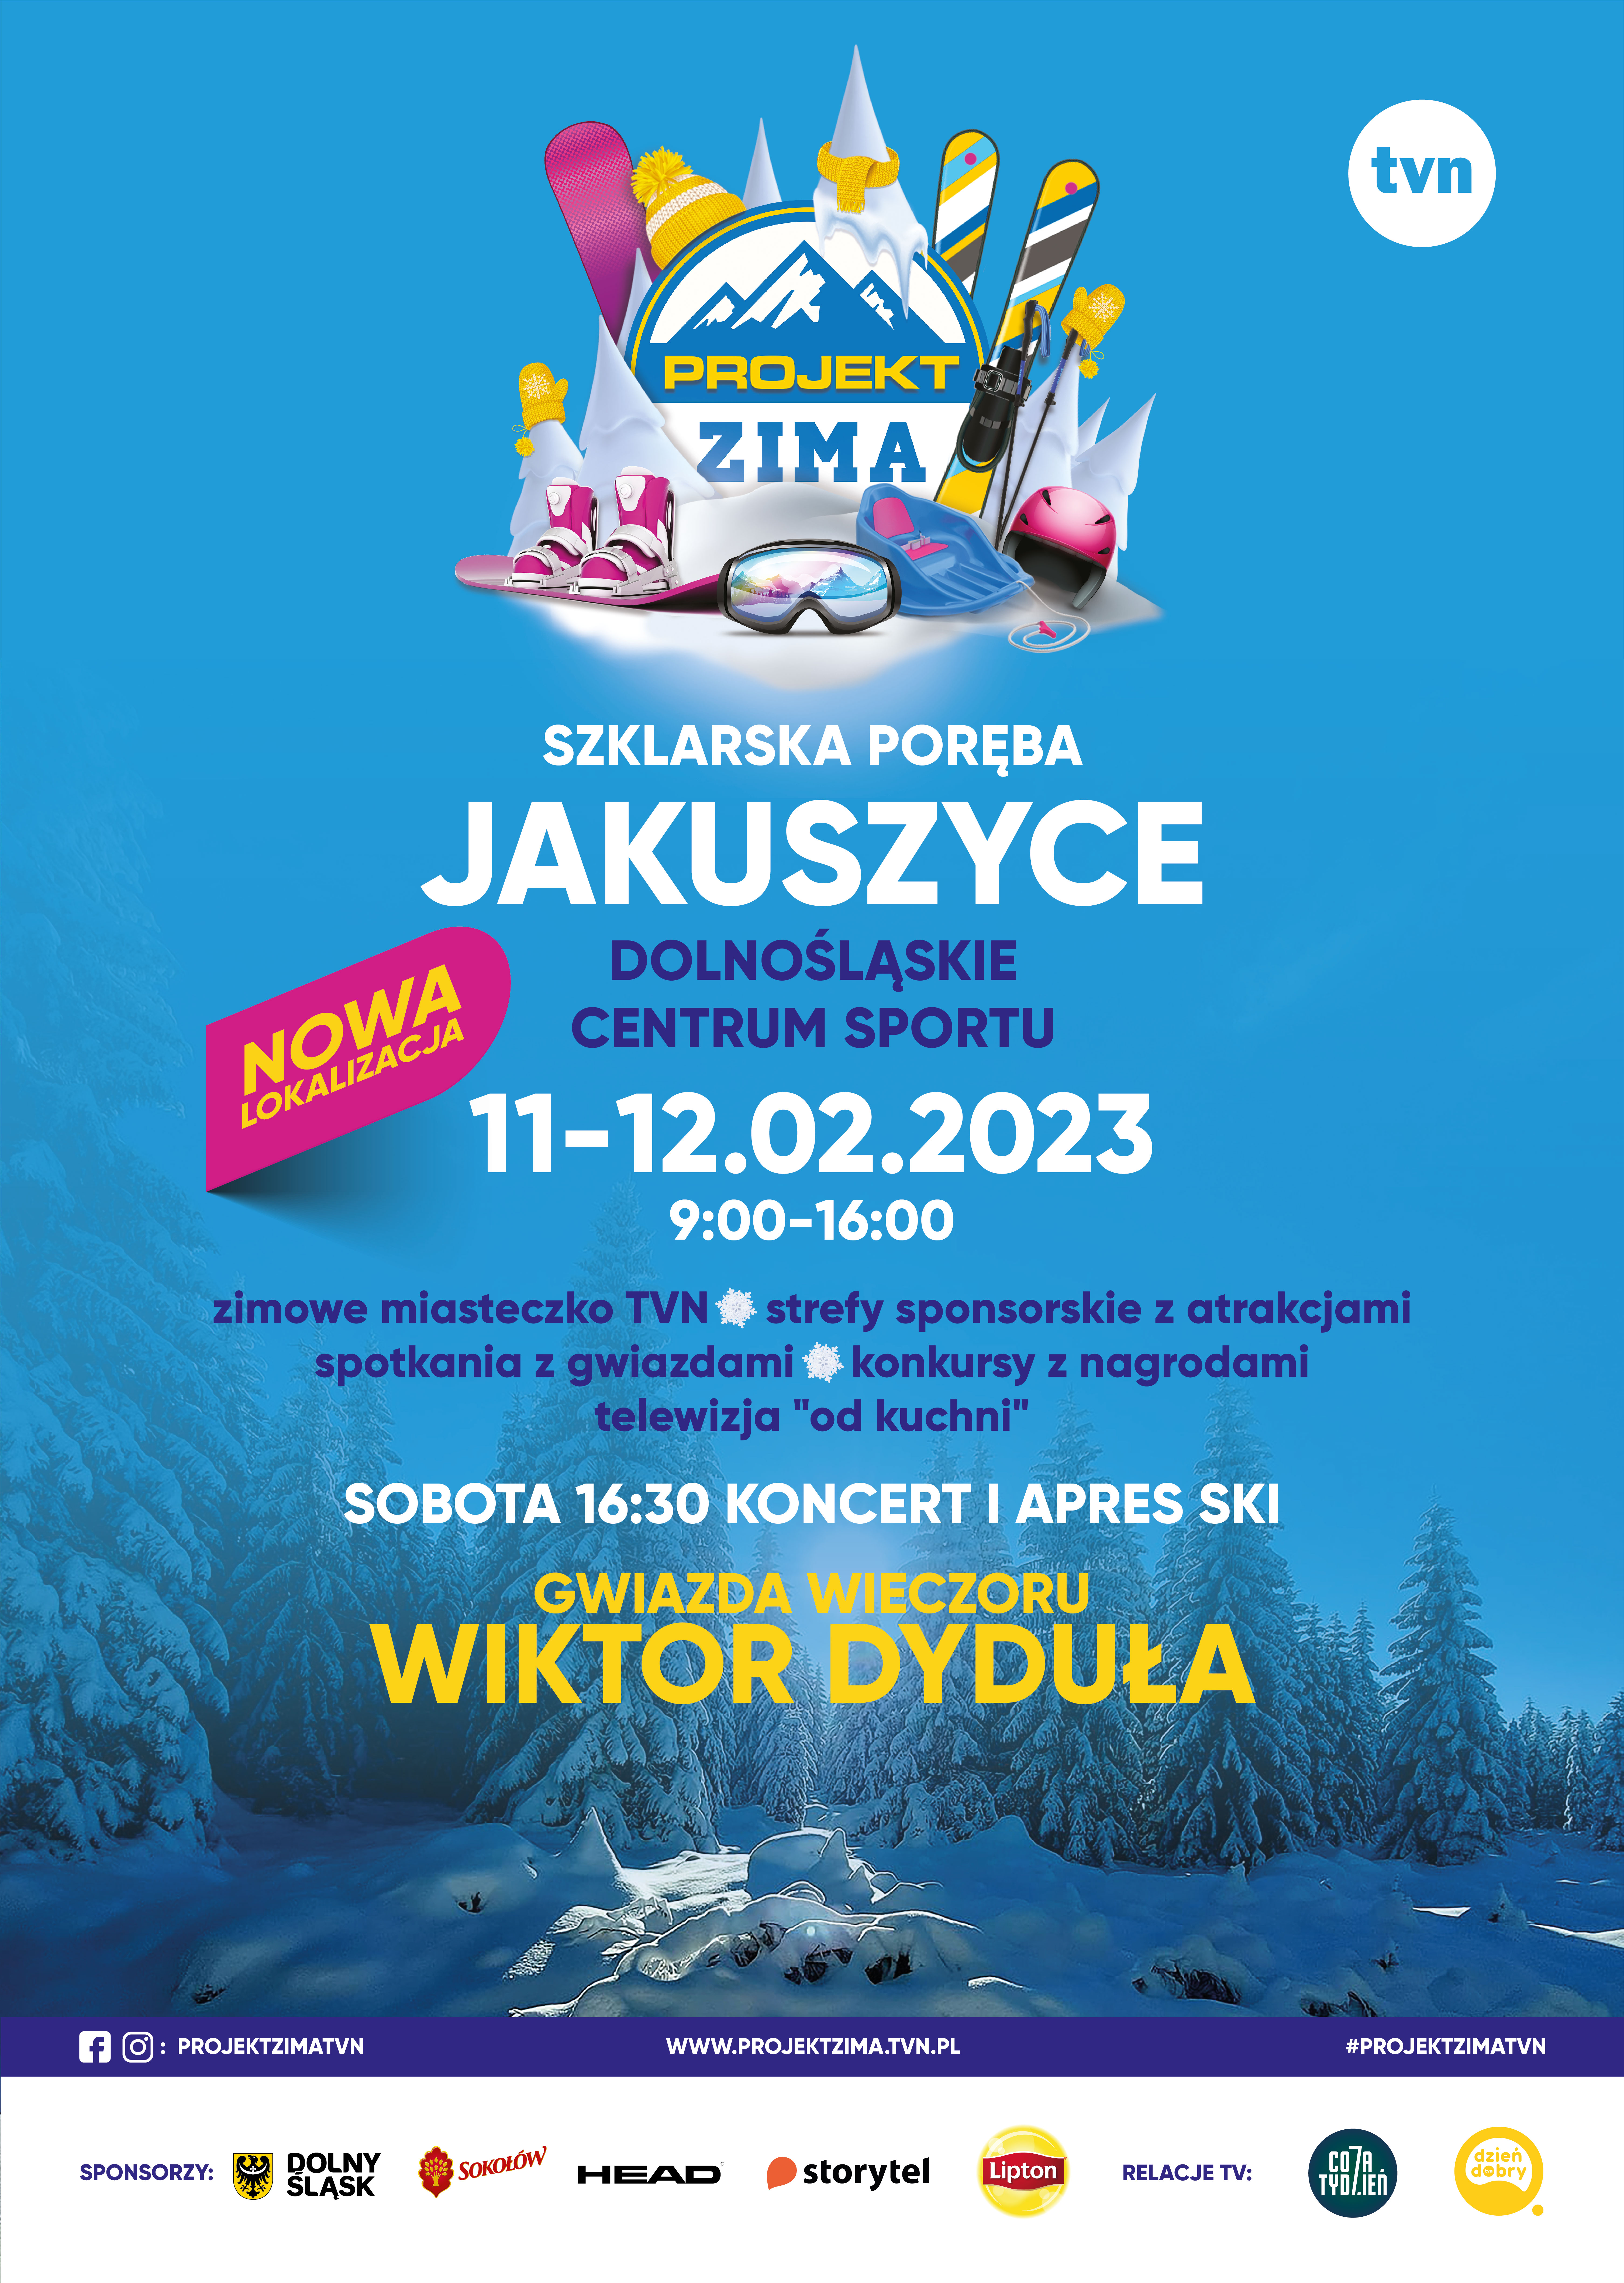 Projekt Zima - Szklarska Poręba-Jakuszyce 11-12 Lutego 2023